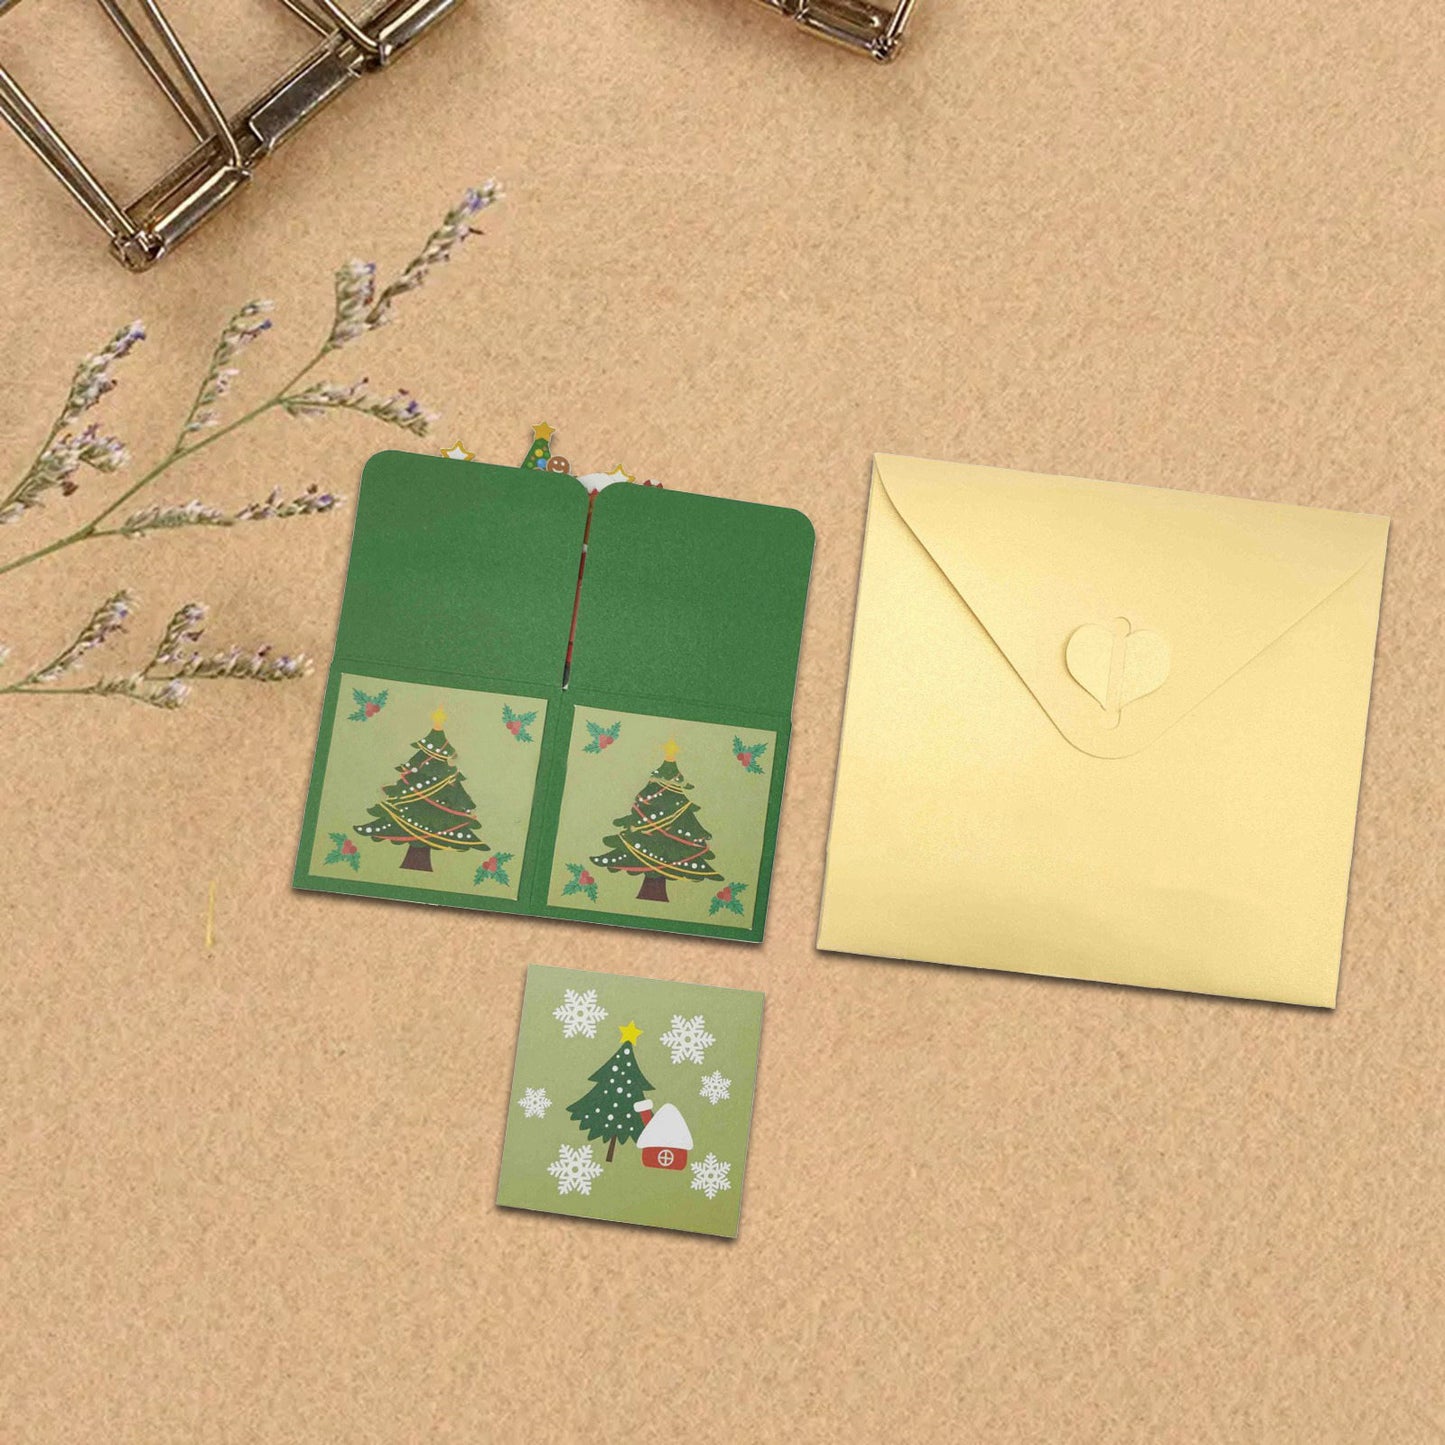 3D Pop Up Christmas Card, Santa Claus cards ， Handmade Popup Greeting Cards